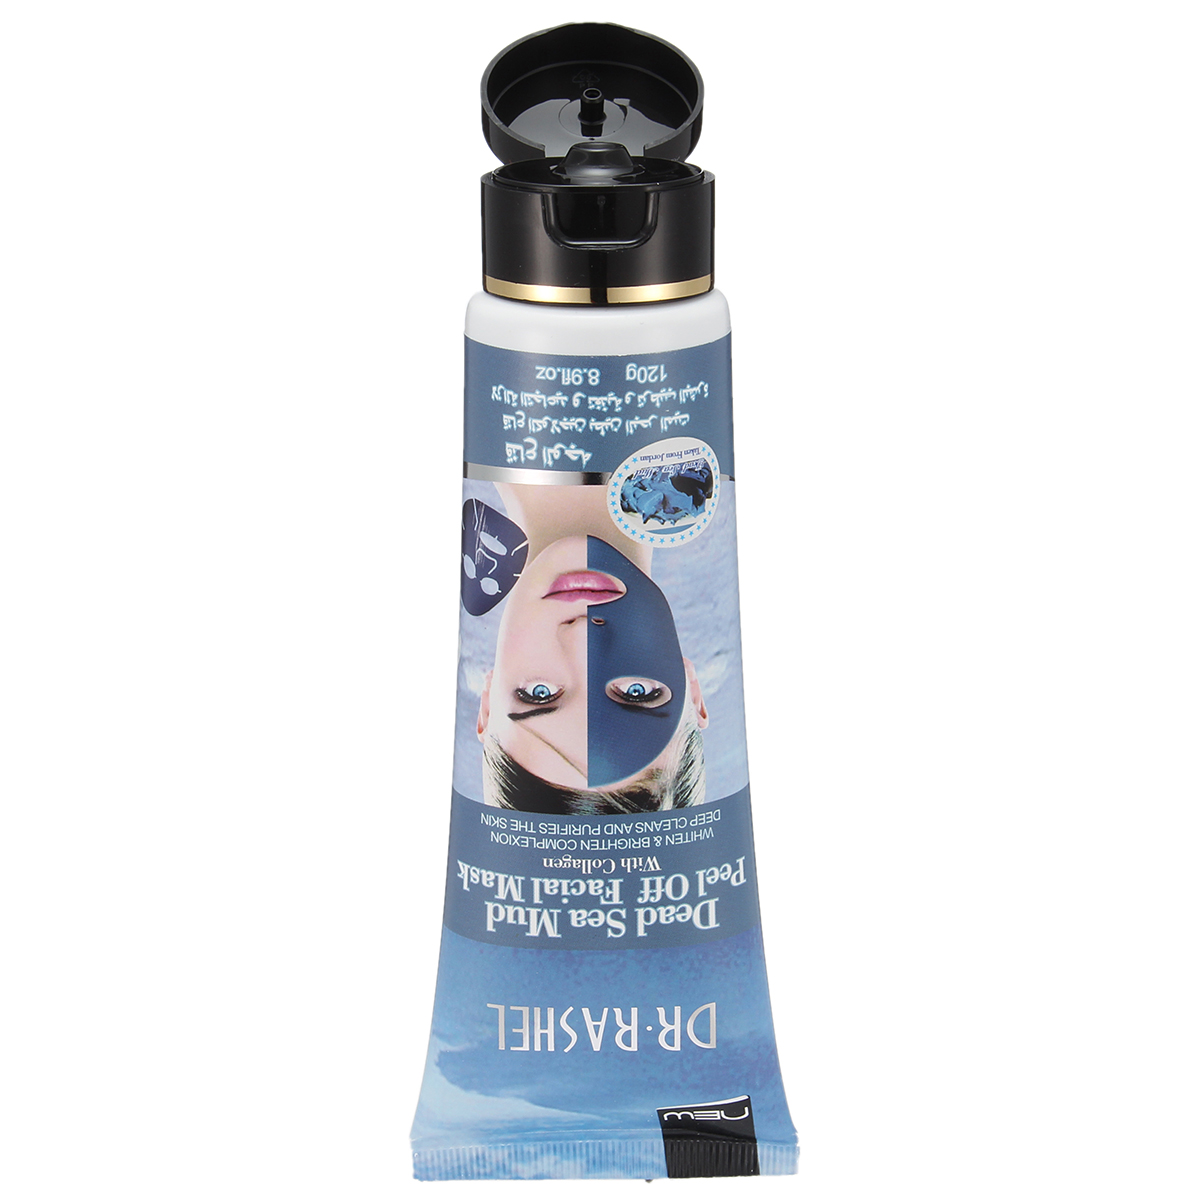 DR.RASHEL Dead Sea Mud Collagen Mask Deep Clean Acne Treatment Peel Off Facial Whiten Pore Purify 120ml